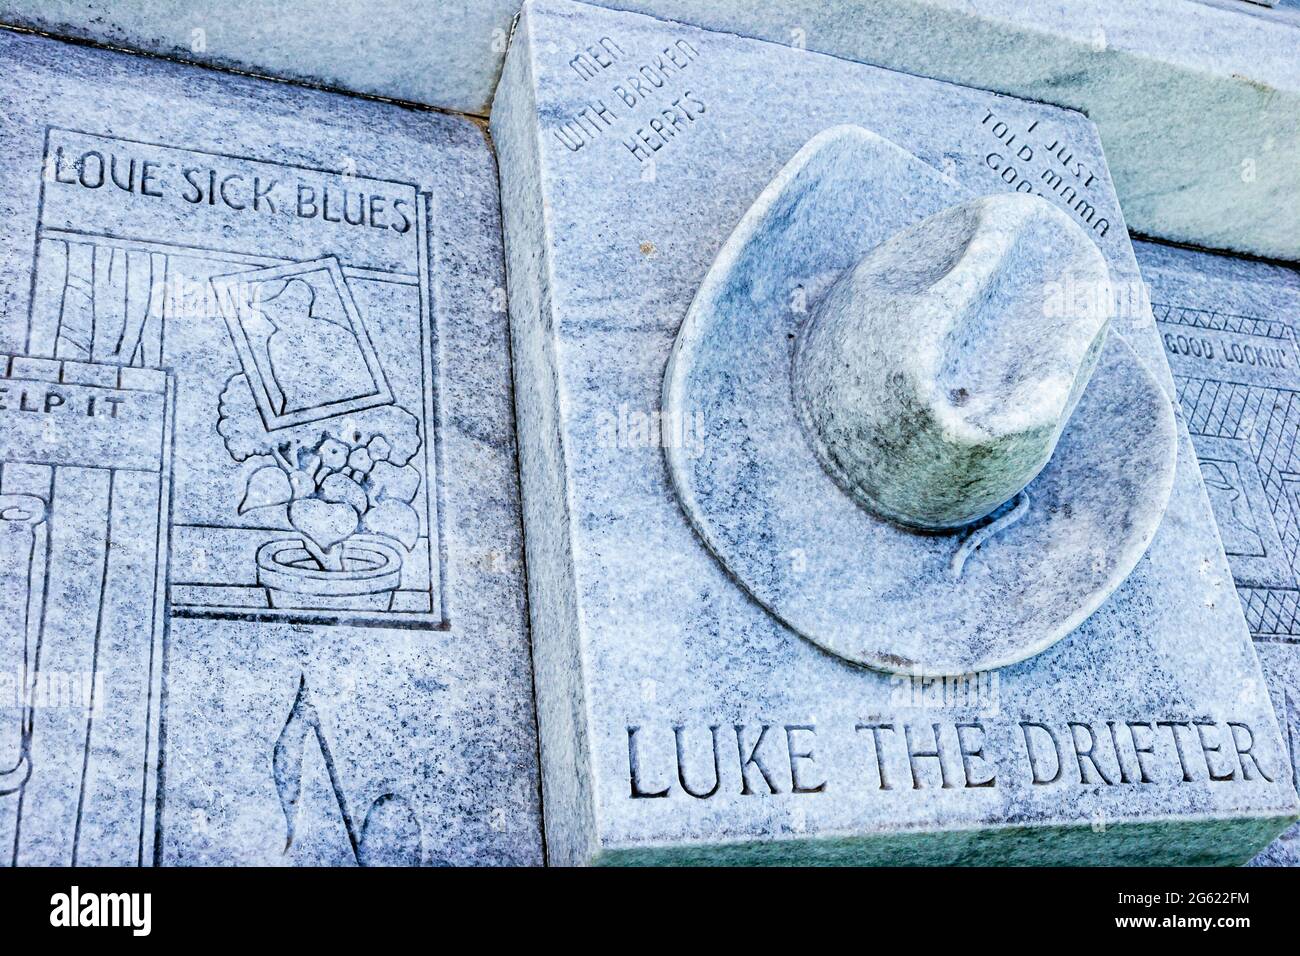 Alabama Montgomery Hank Williams gravesite,tombstone grave details hat Luke The Drifter country music singer, Stock Photo